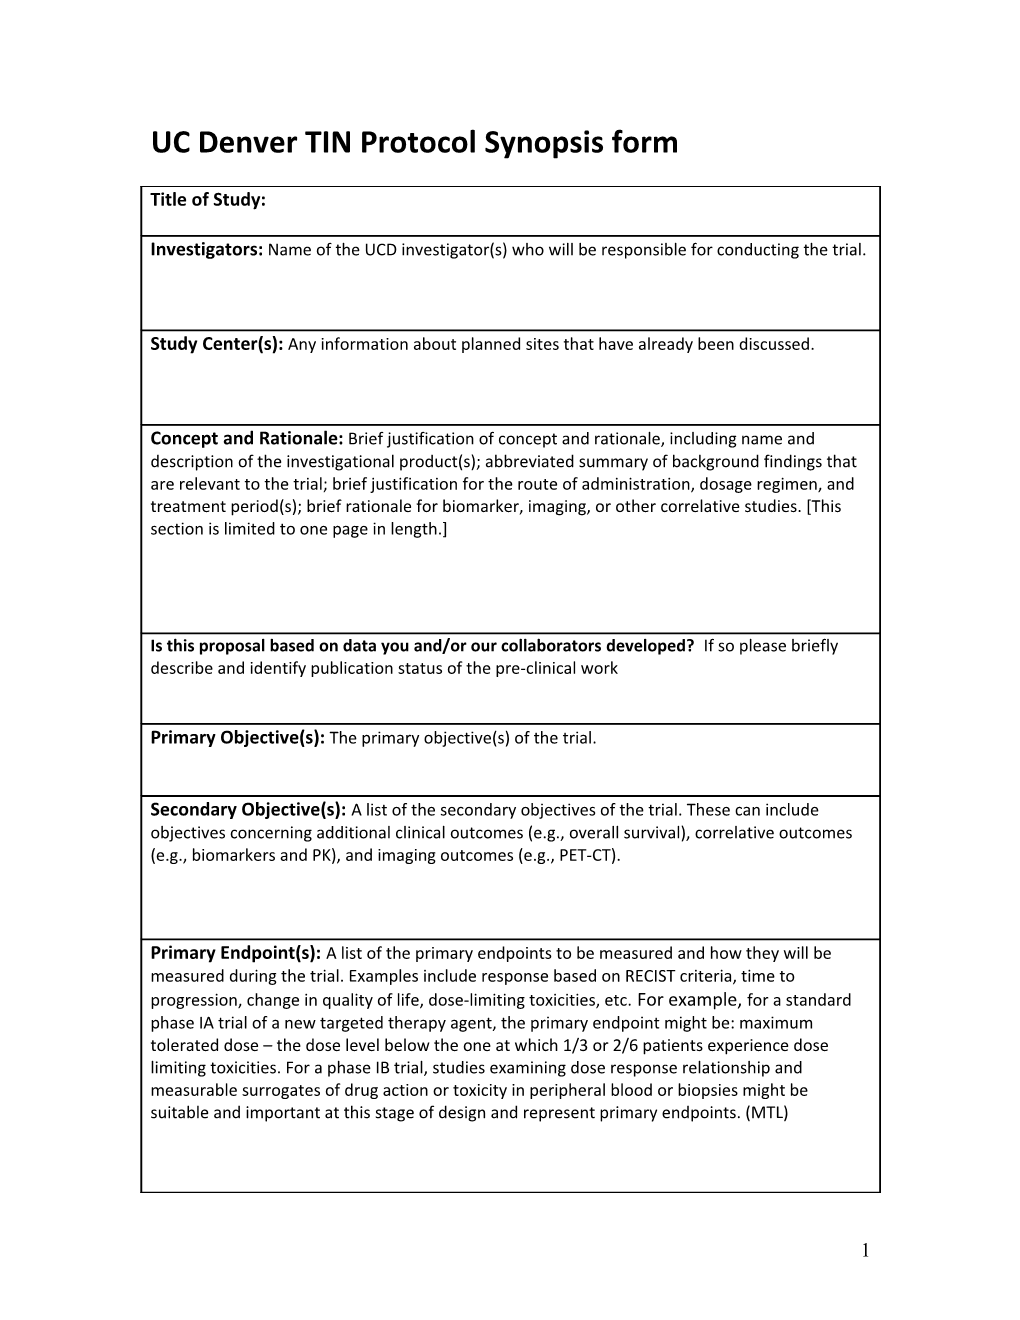 UC Denver TIN Protocol Synopsis Form